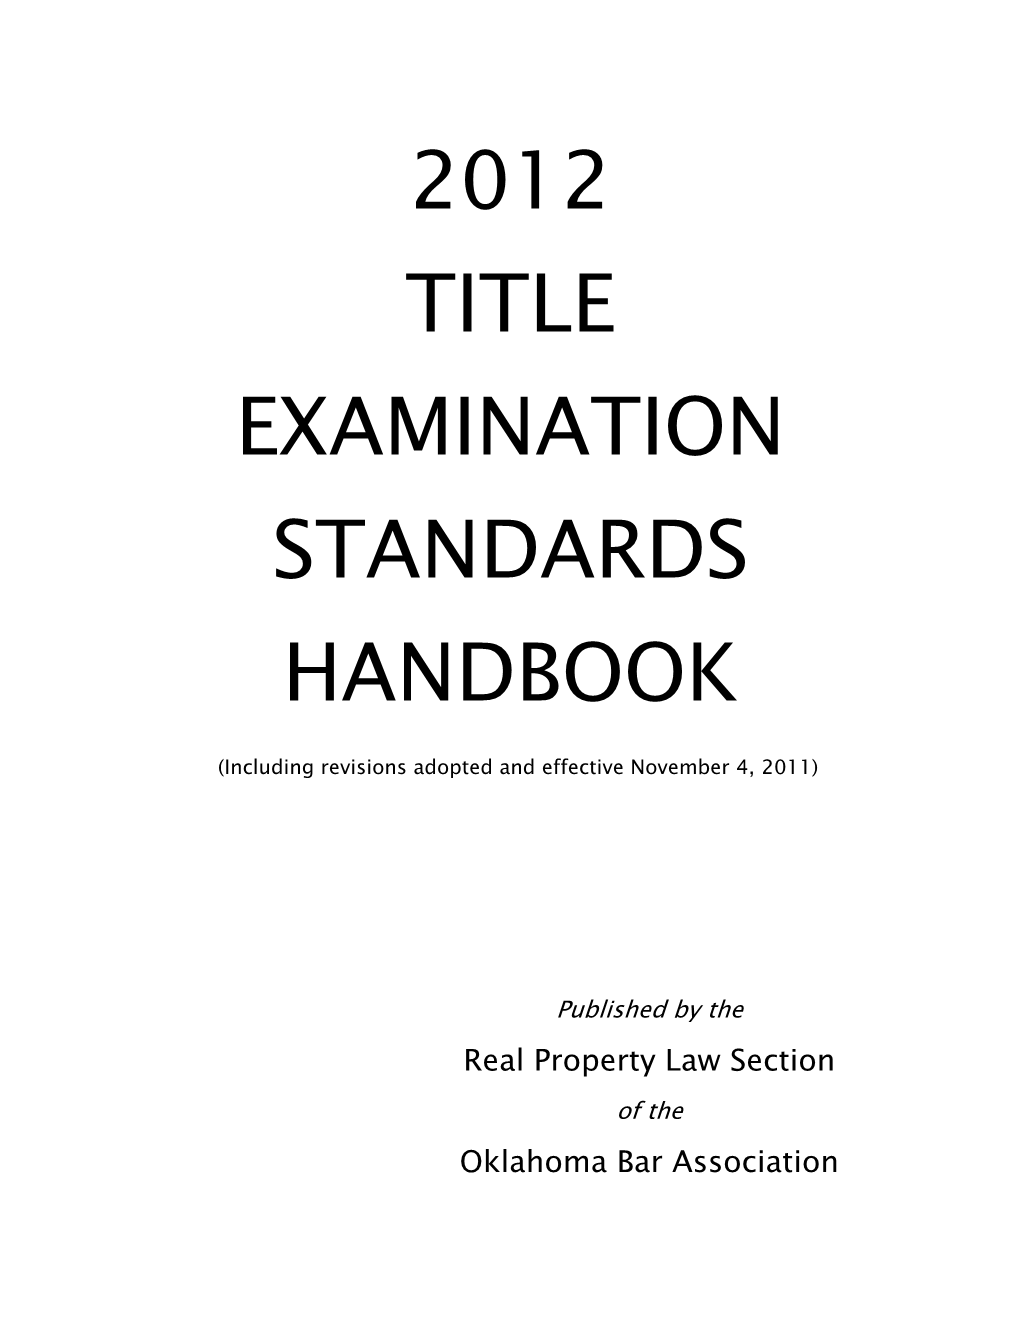 2012 Title Examination Standards Handbook